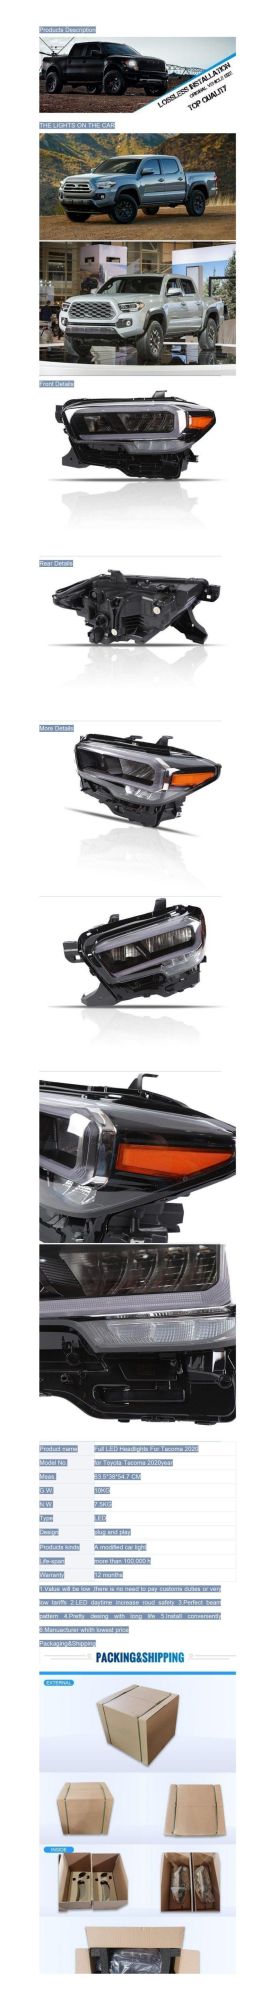 LED Headlight 8115004250 2020 811104250 Headlamp for Toyota Tacoma